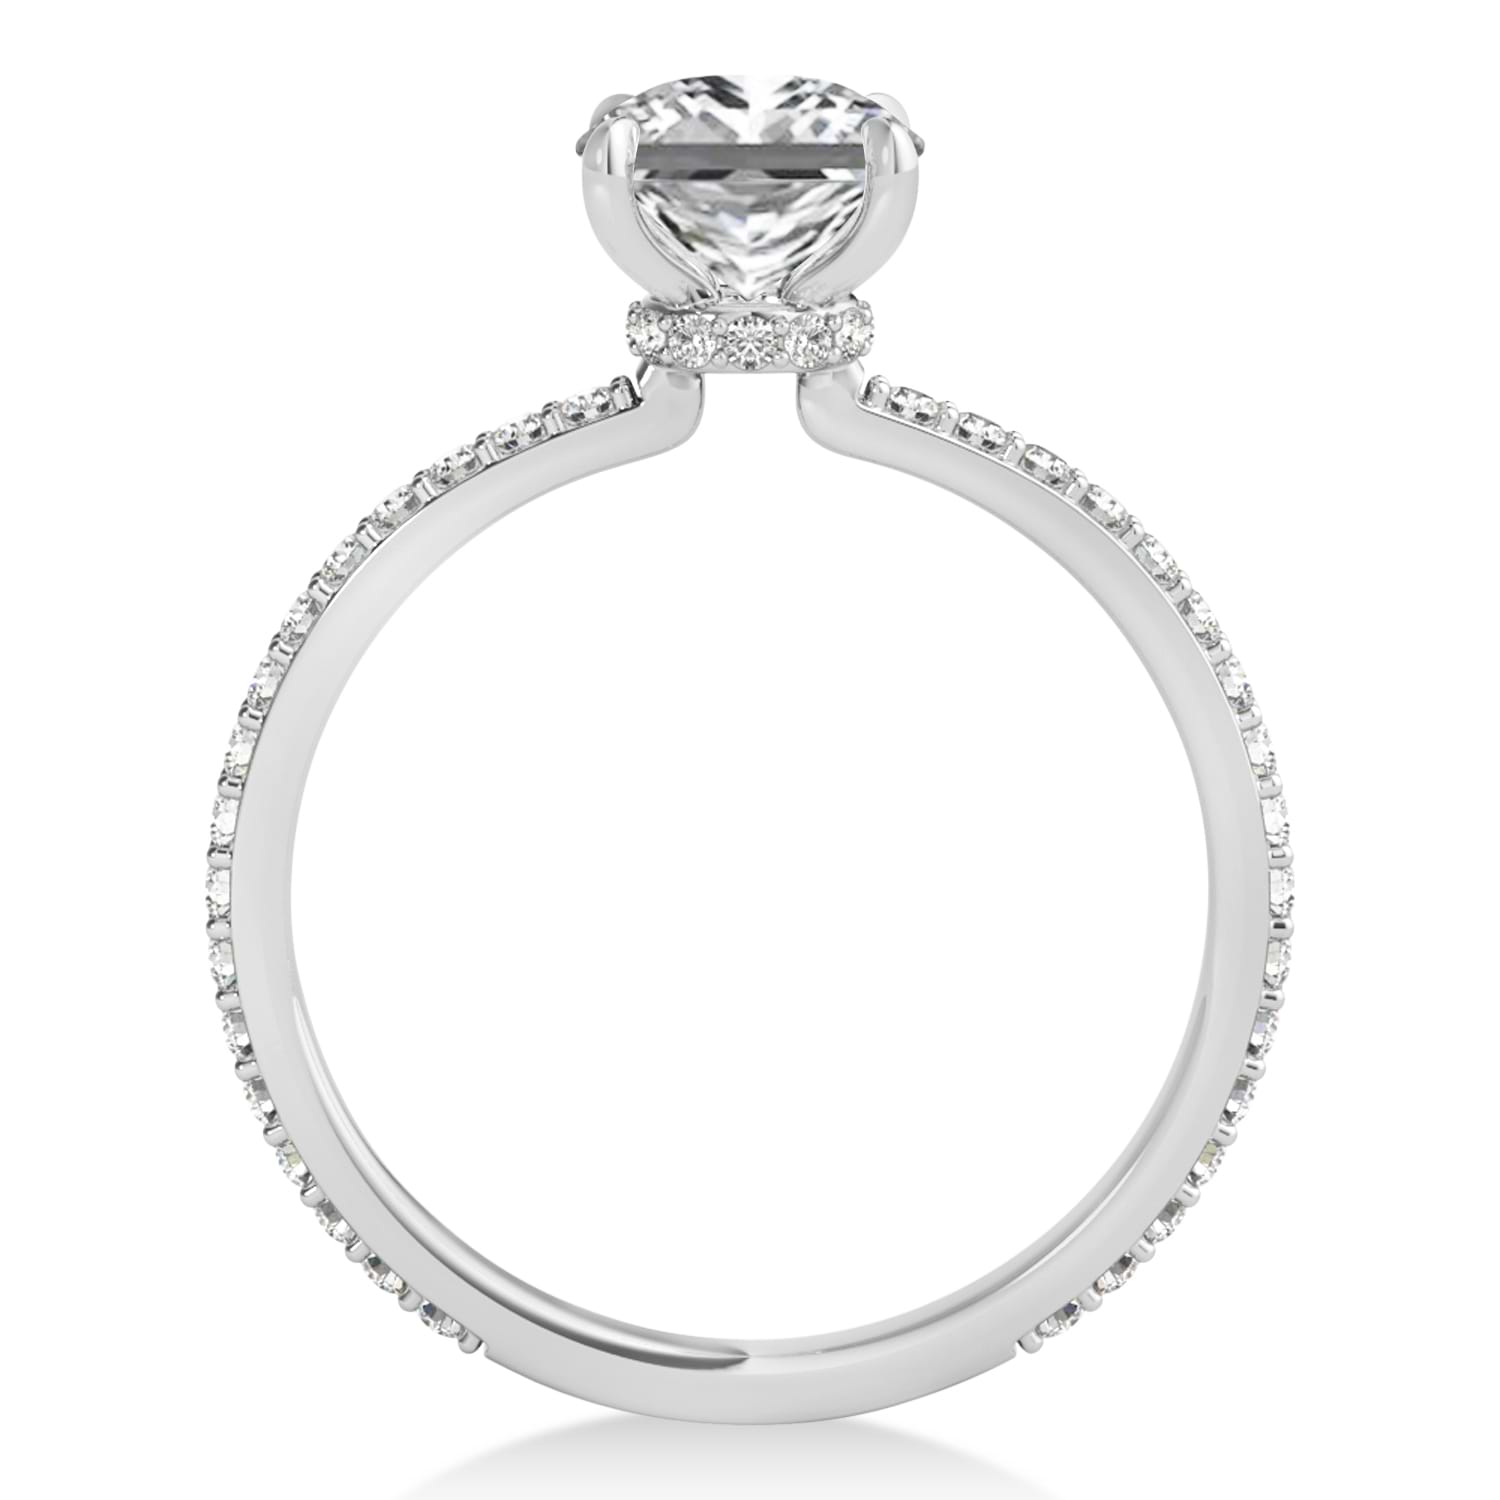 Princess Diamond Hidden Halo Engagement Ring 18k White Gold (0.89ct)